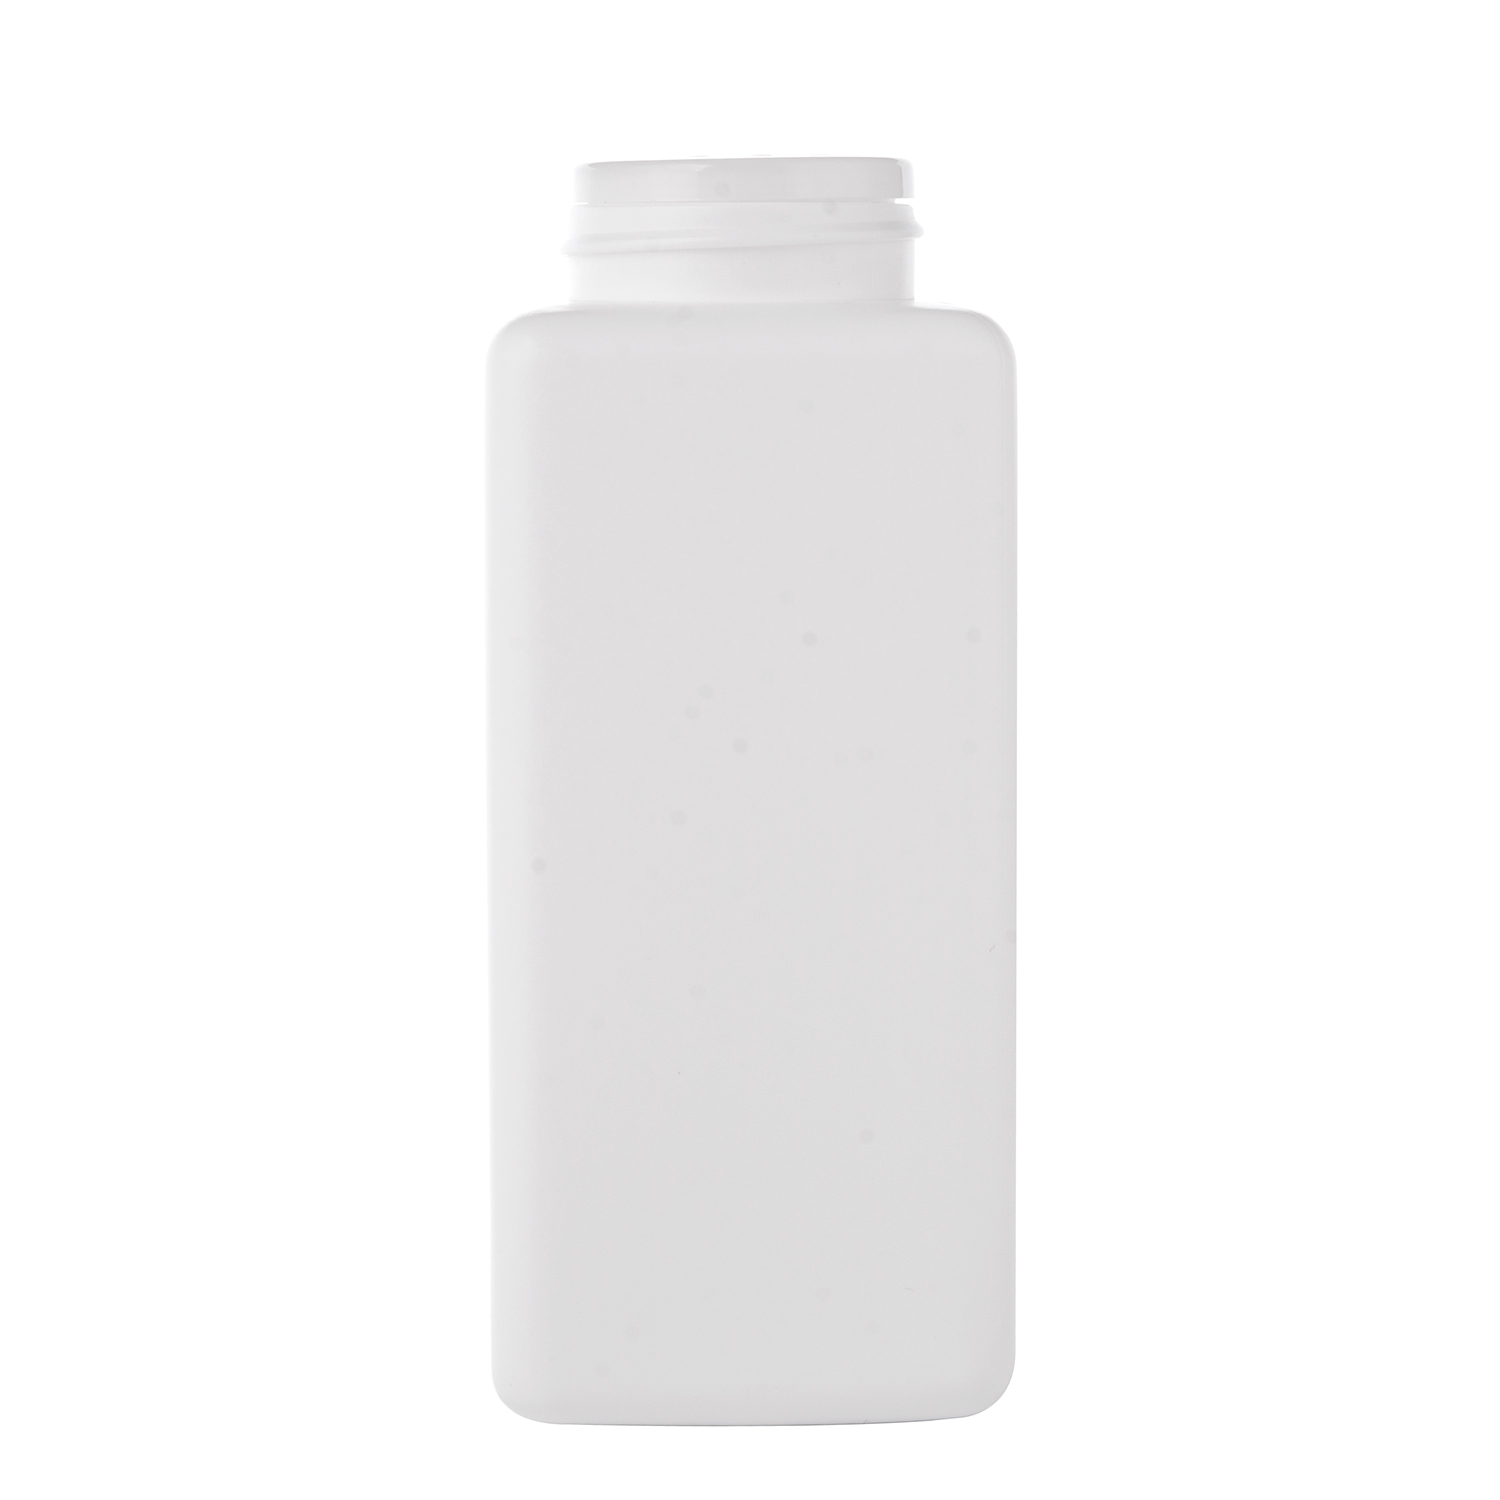 100ml PE Cosmetic Bottle White Plastic Bottle with Screw Cap